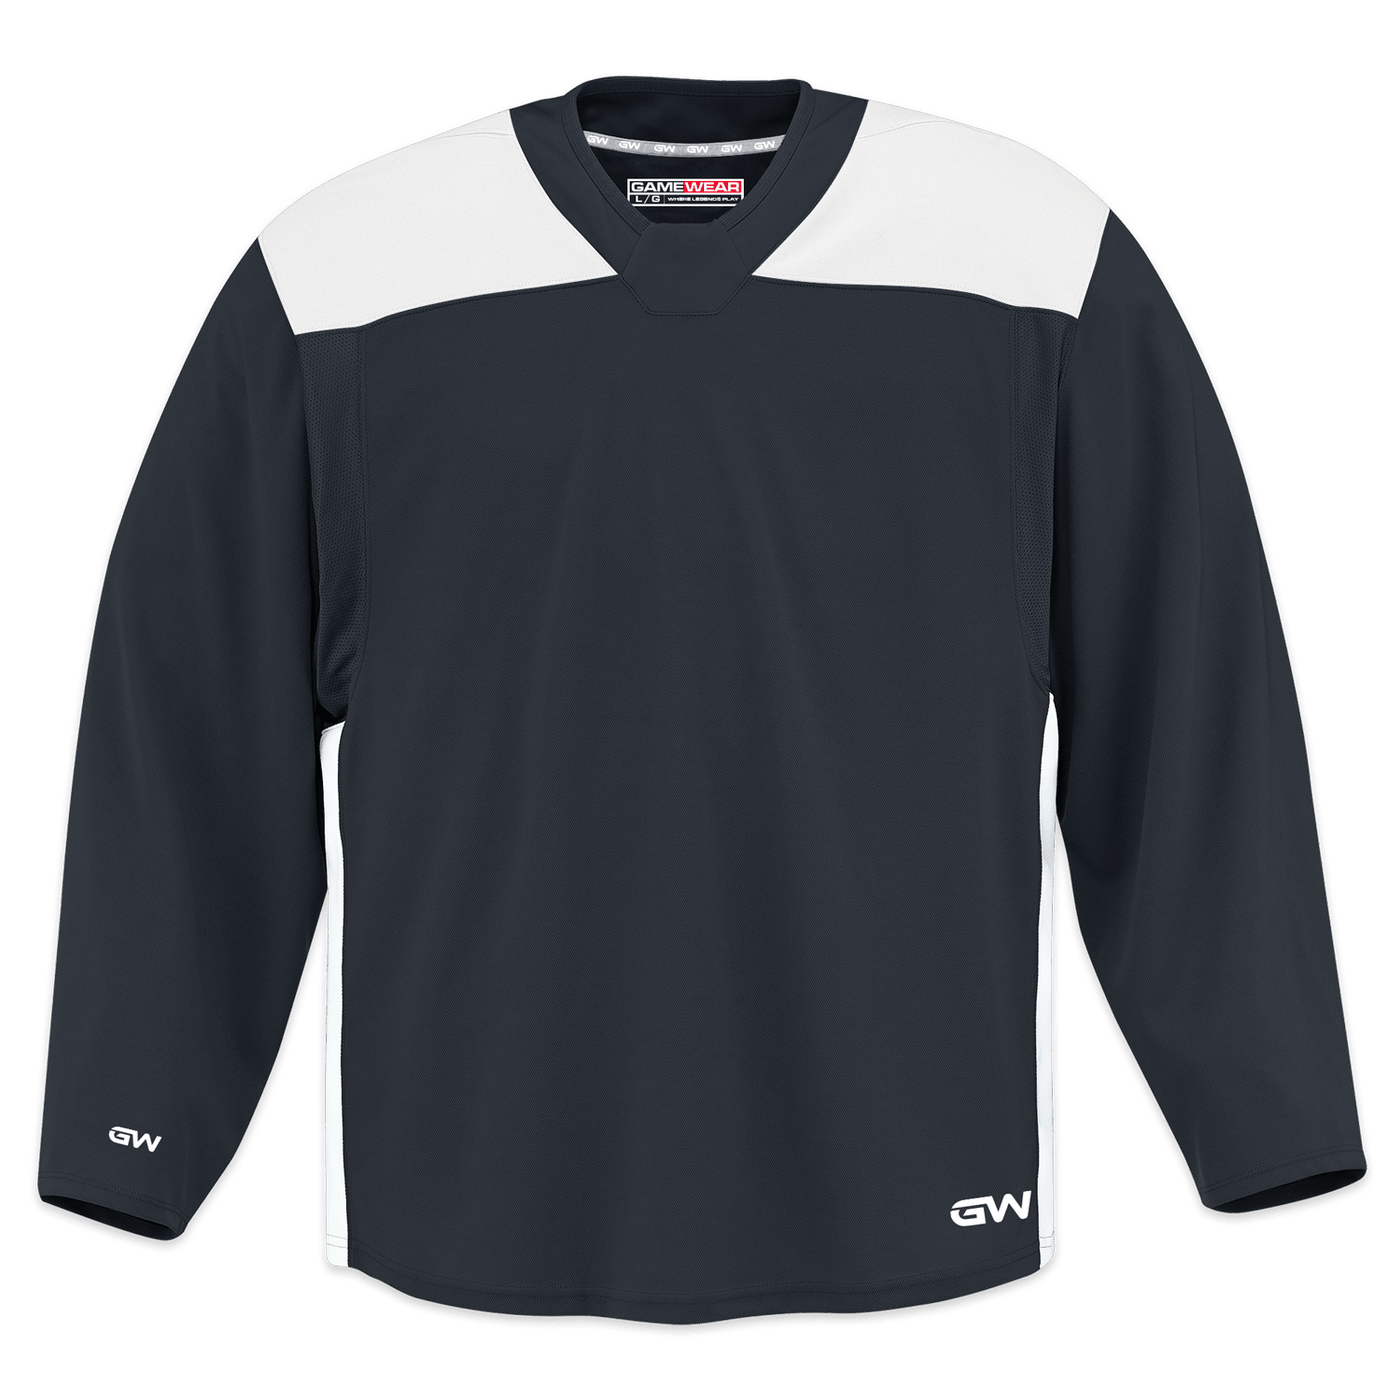 GameWear GW6500 ProLite Series Junior Hockey Practice Jersey - Black / White - The Hockey Shop Source For Sports